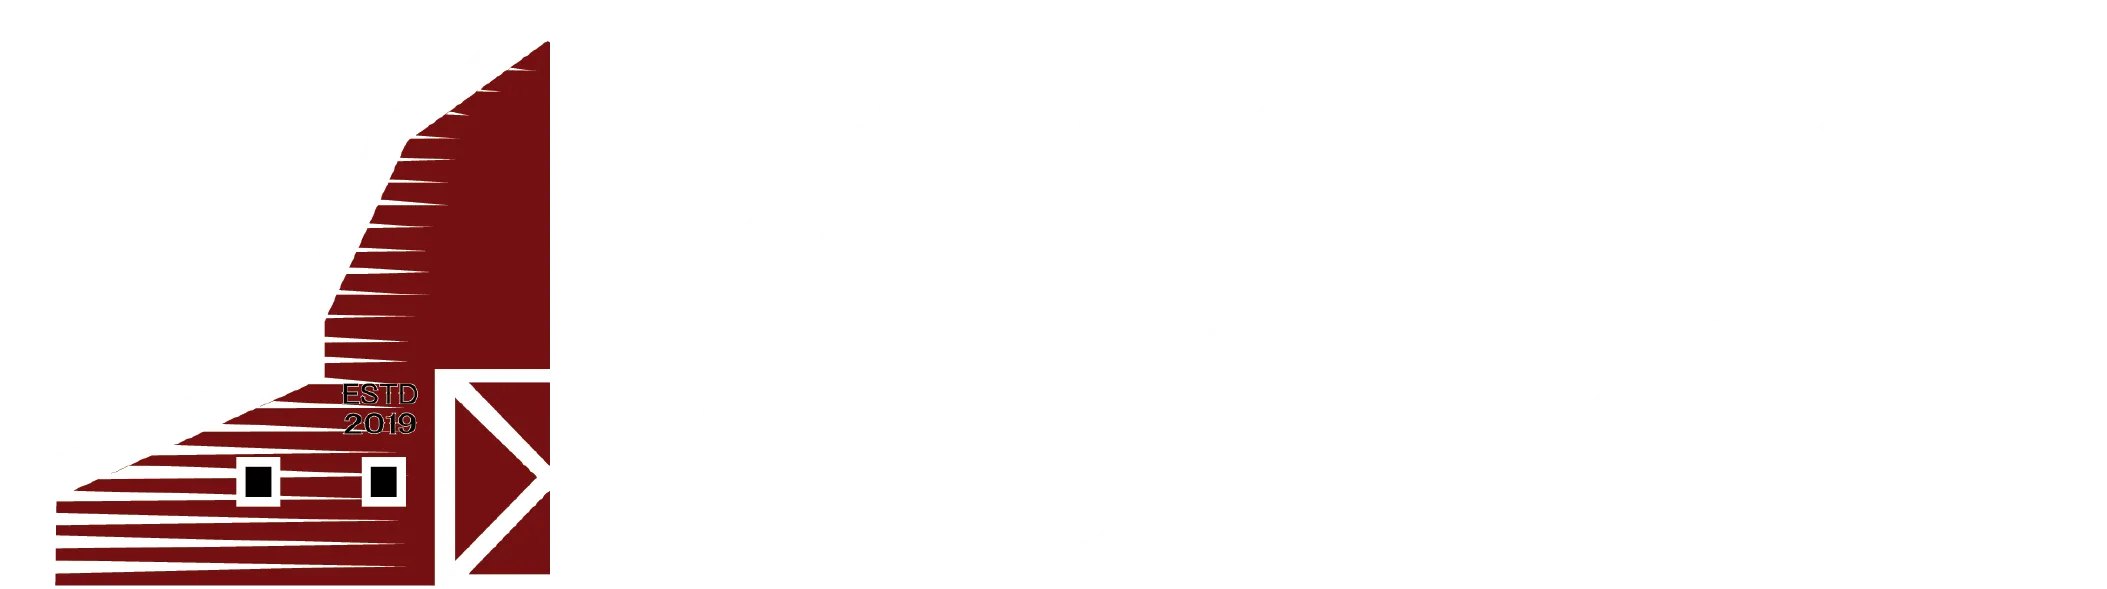 BarnerWorx white logo